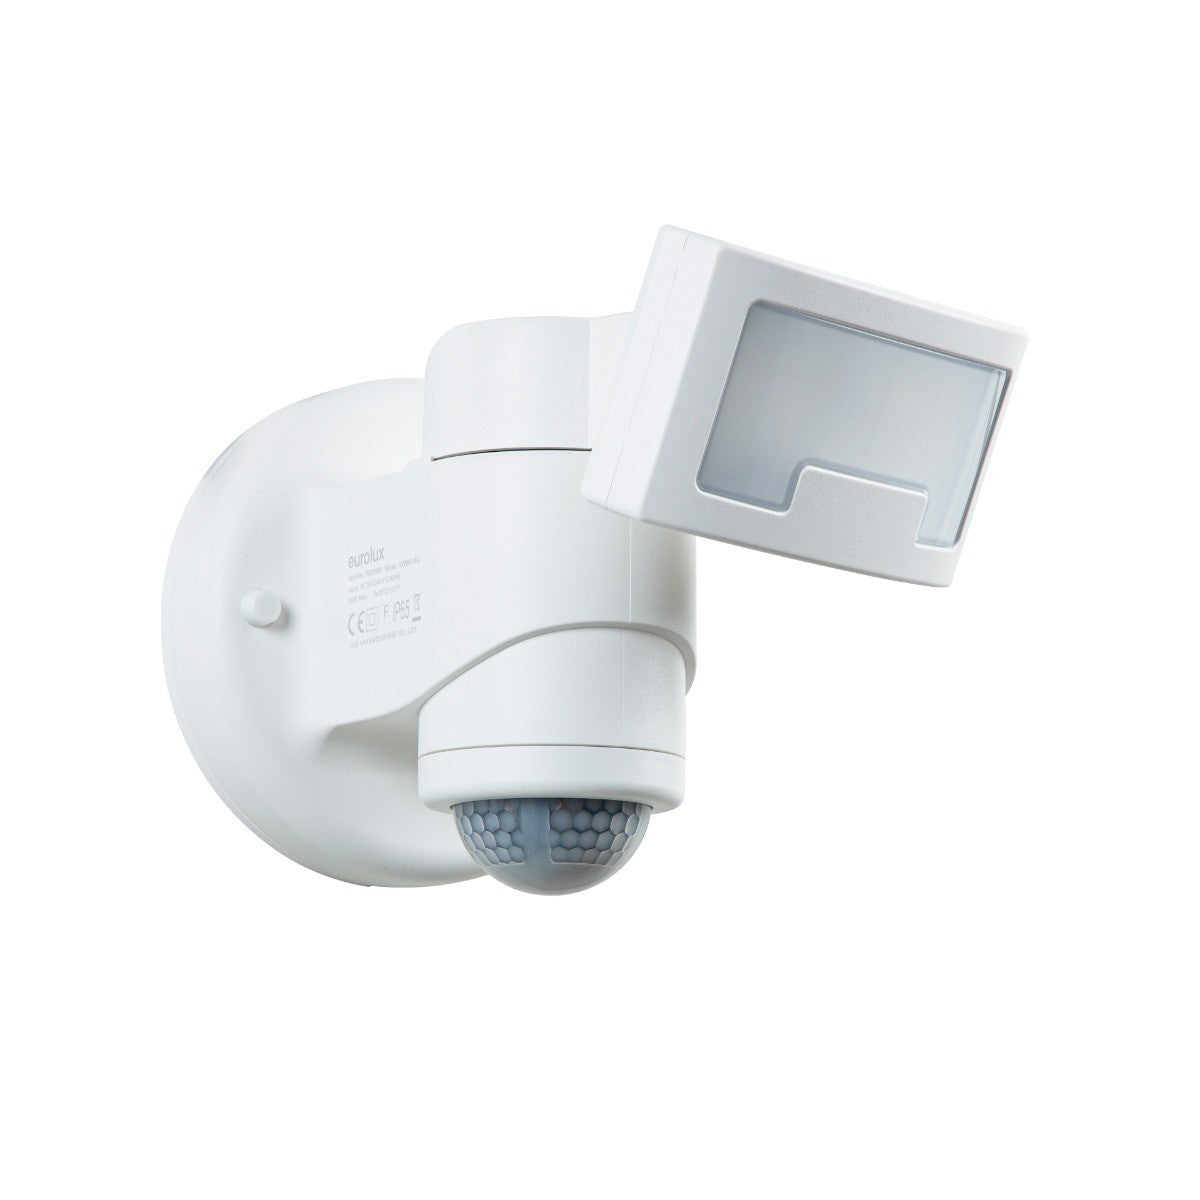 Versonel Nightwatcher VSL90W Outdoor Smart Motion Tracking Security Light